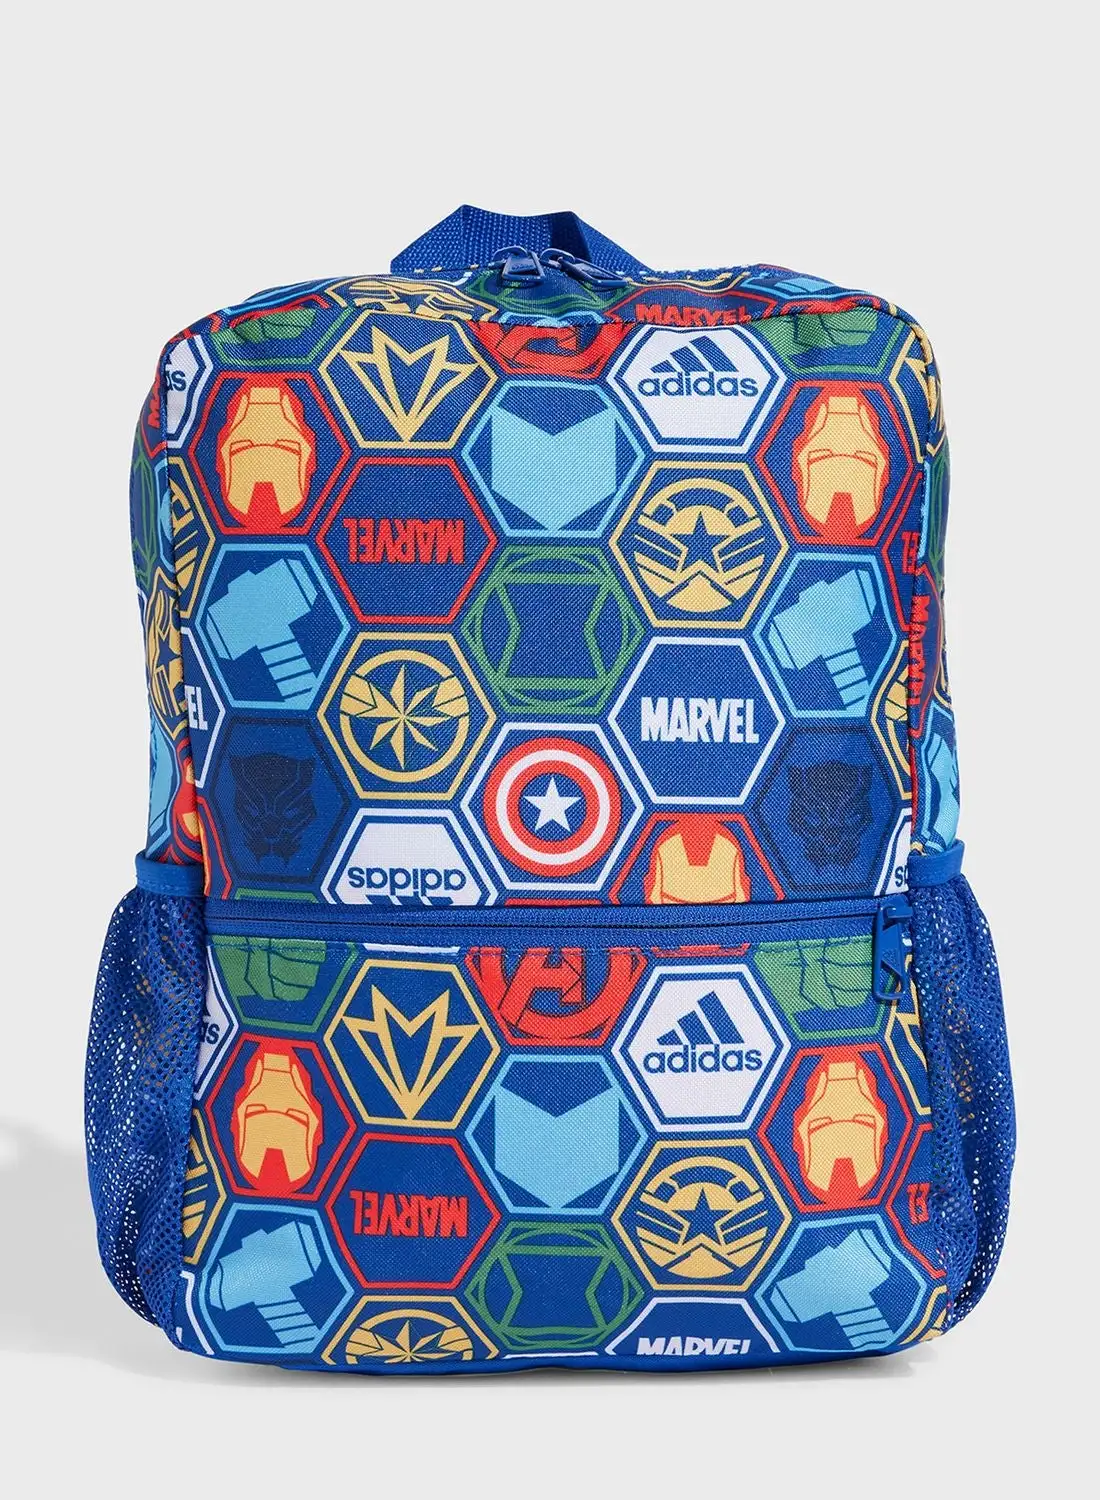 Adidas Little Kids Marvel Backpack